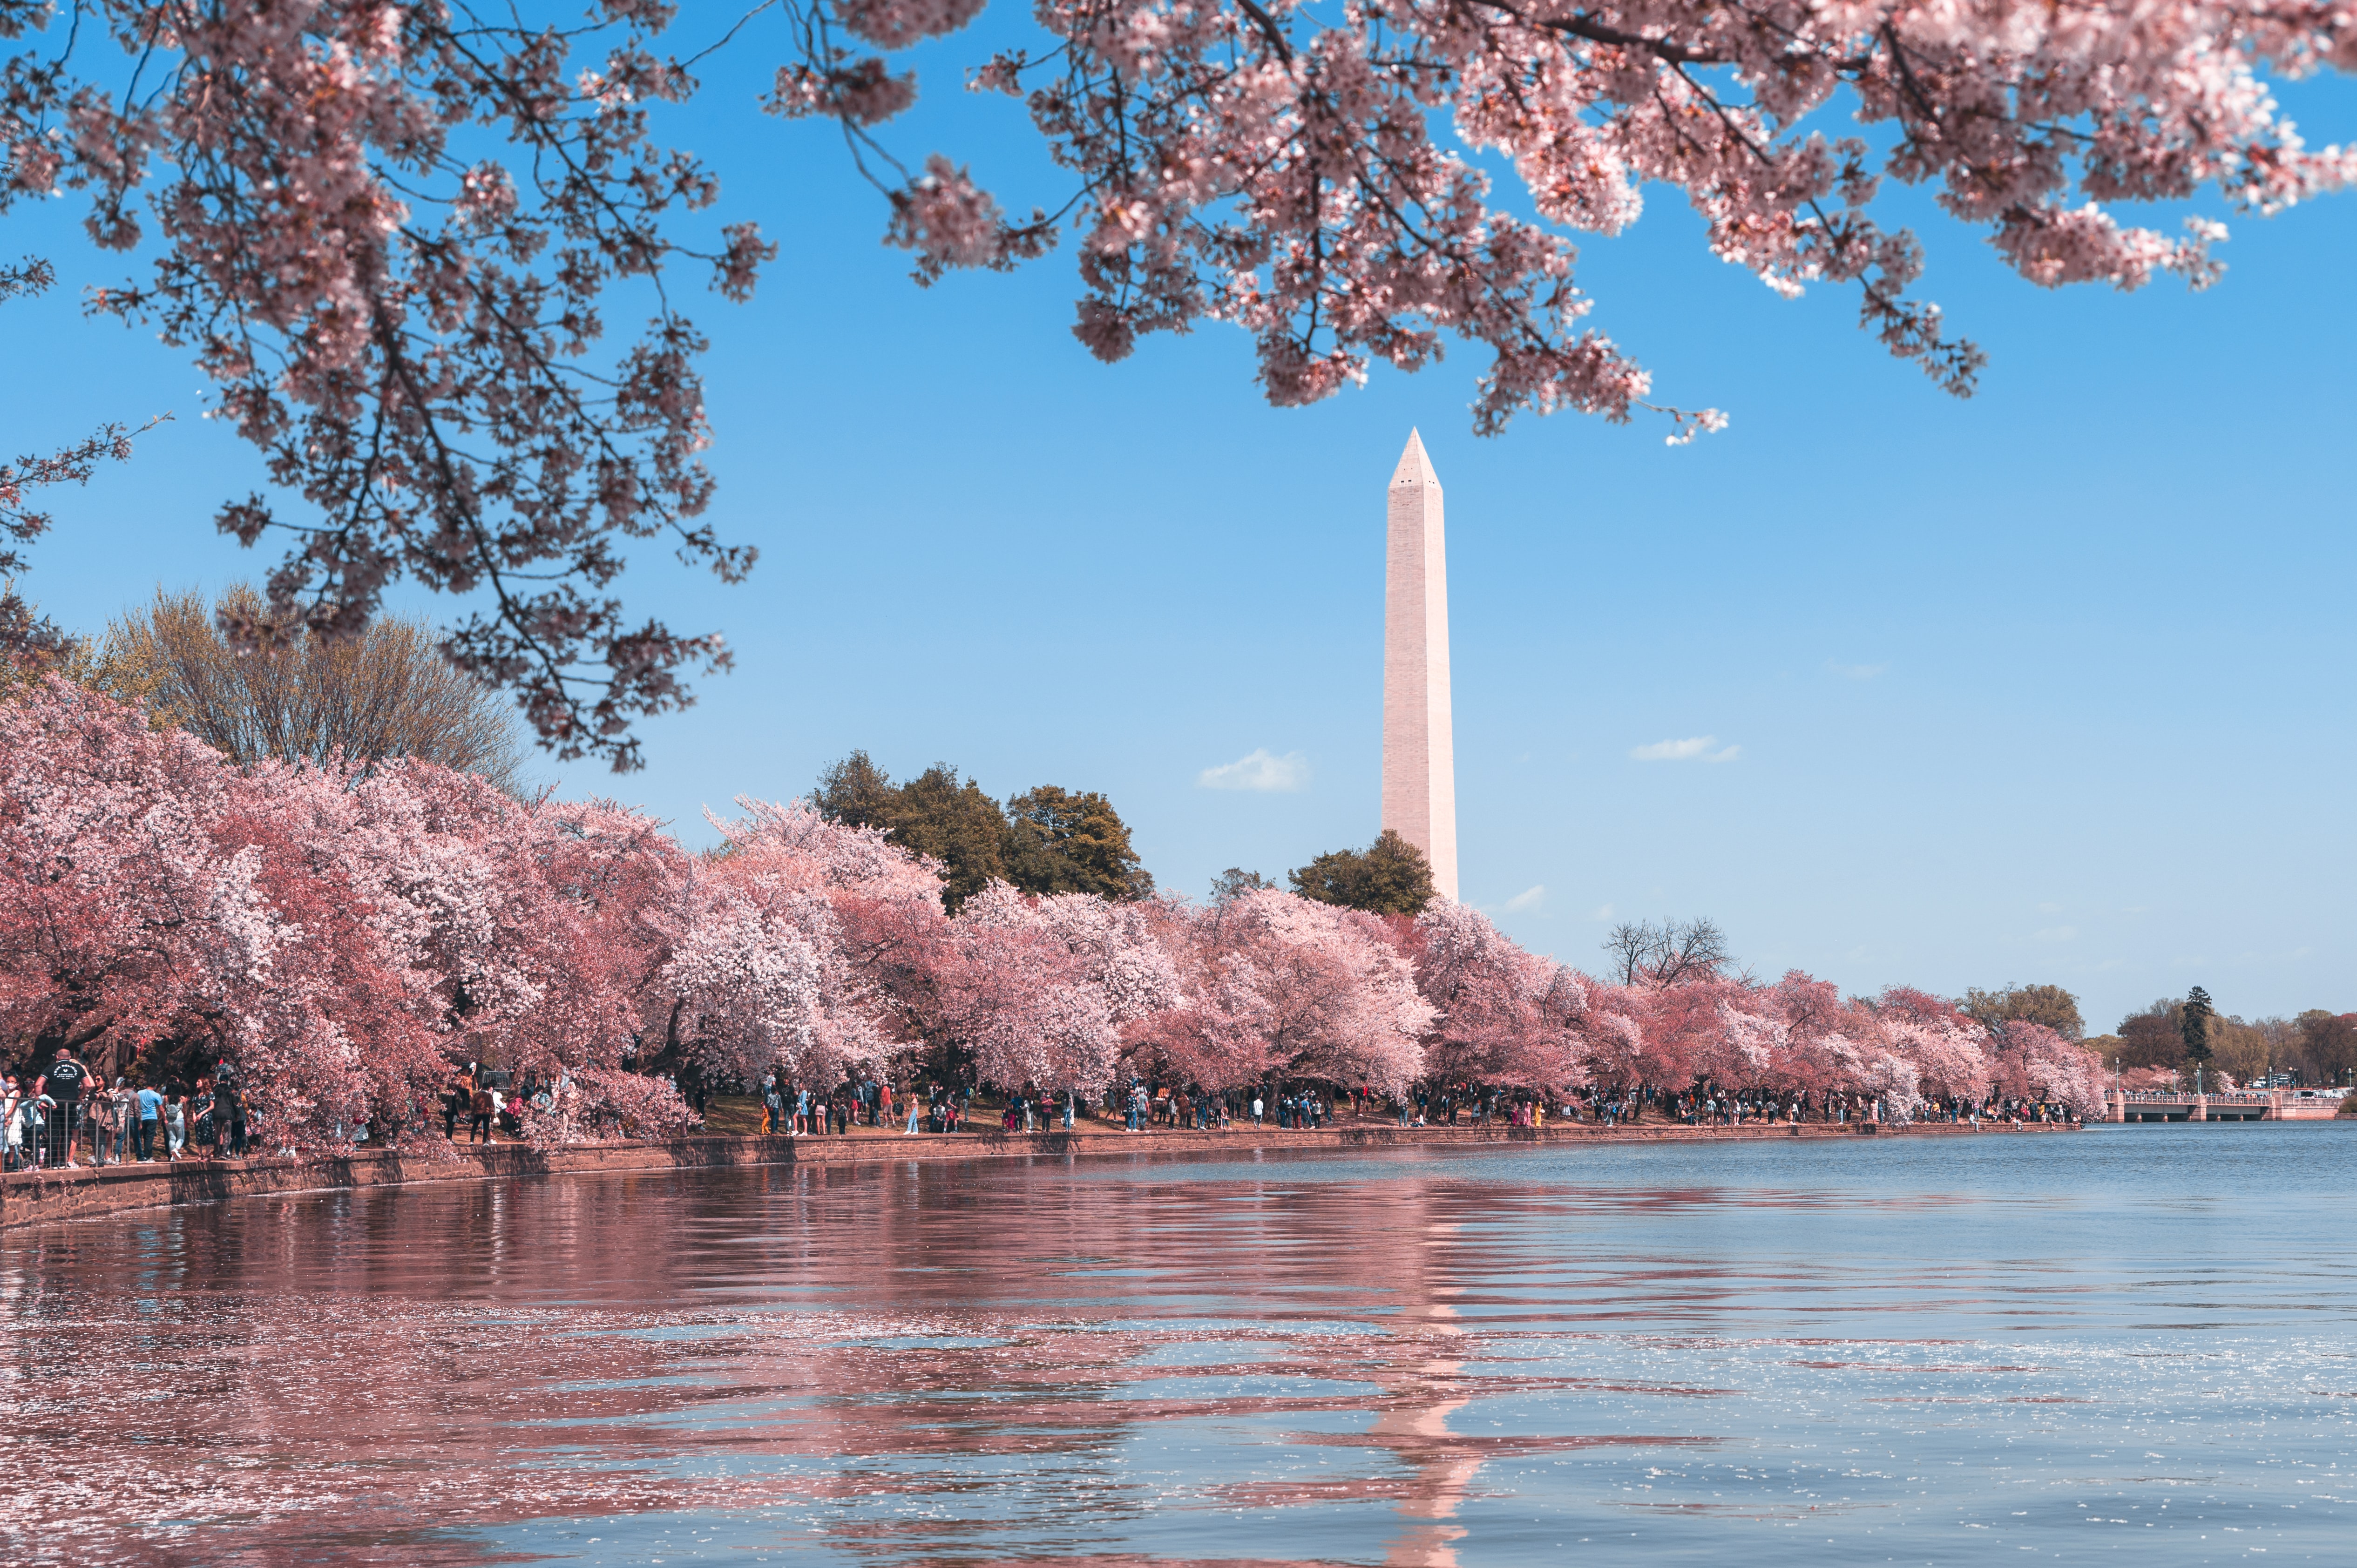 The National Cherry Blossom Festival Your RV Guide by MangoRV